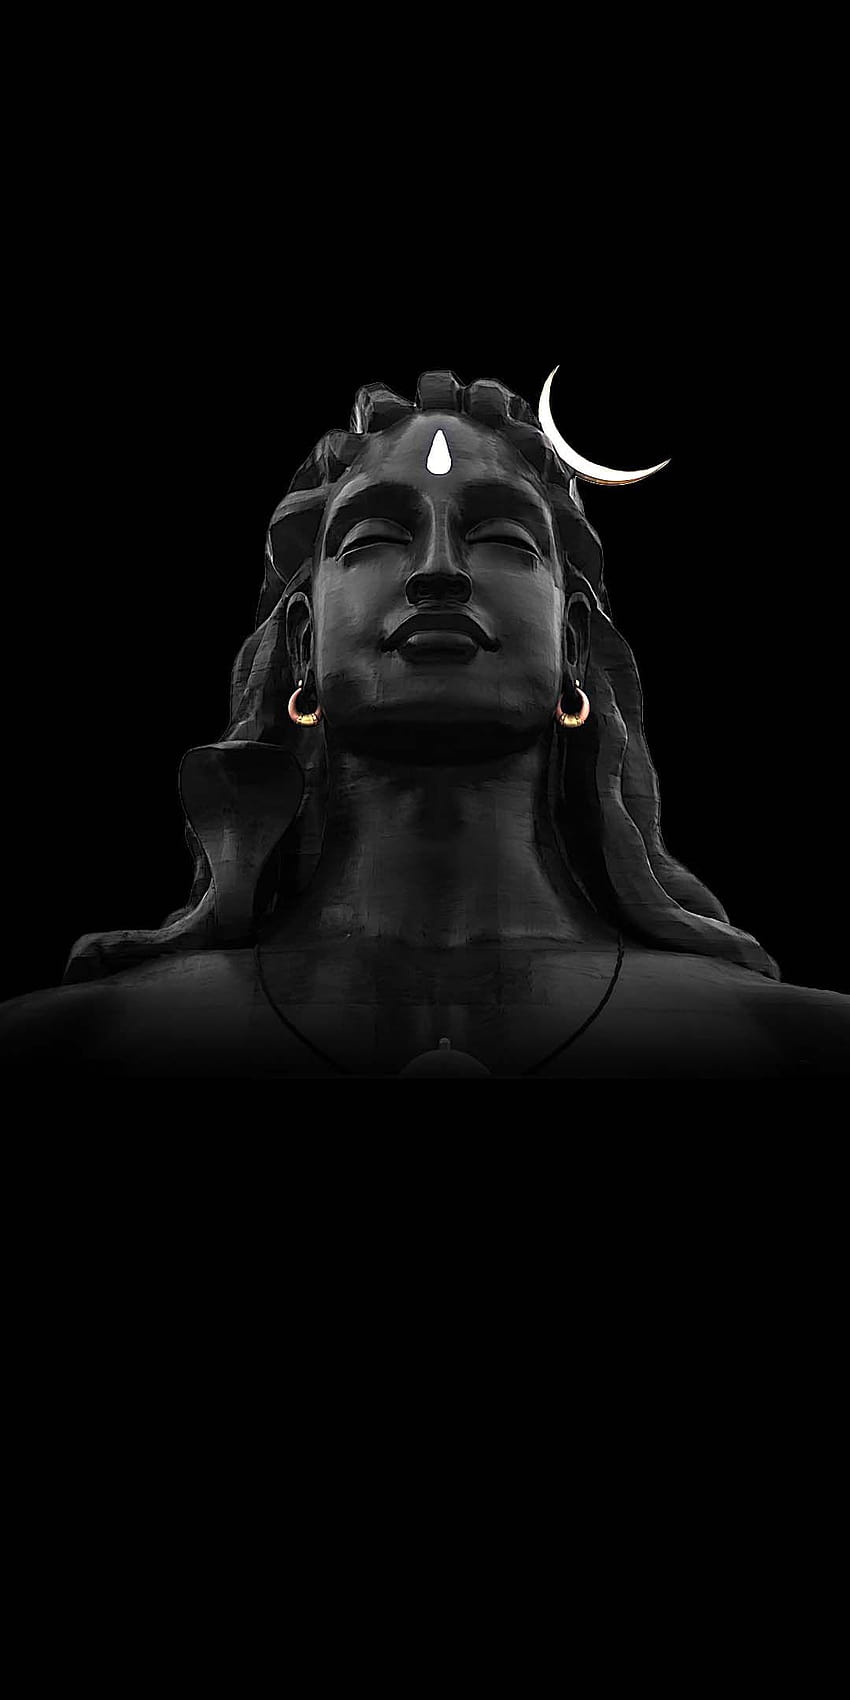 Lord Shiva em 2019, lord shiva android irritado Papel de parede de celular HD